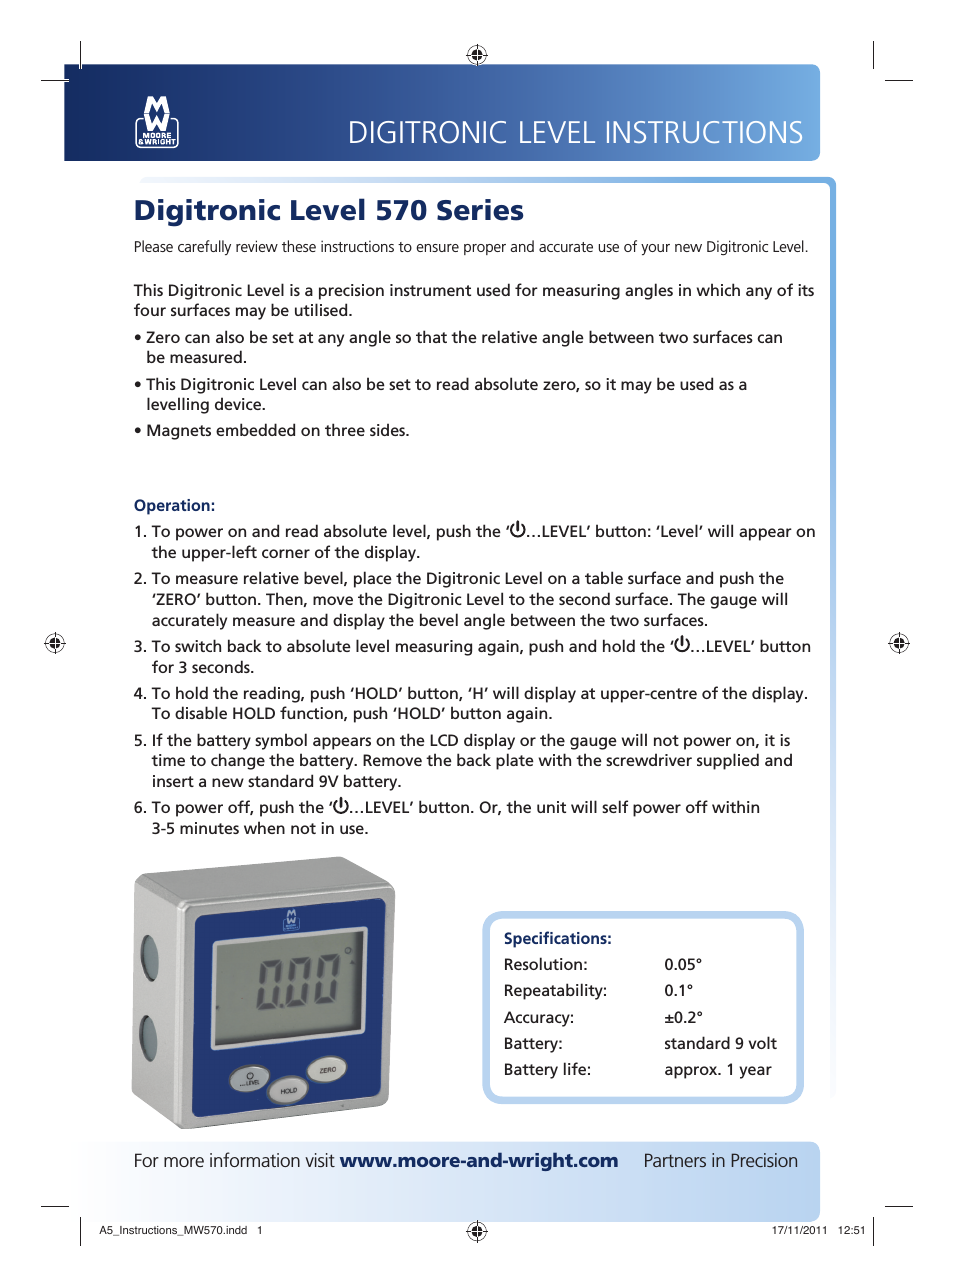 M&W Digitronic Level 570 Series